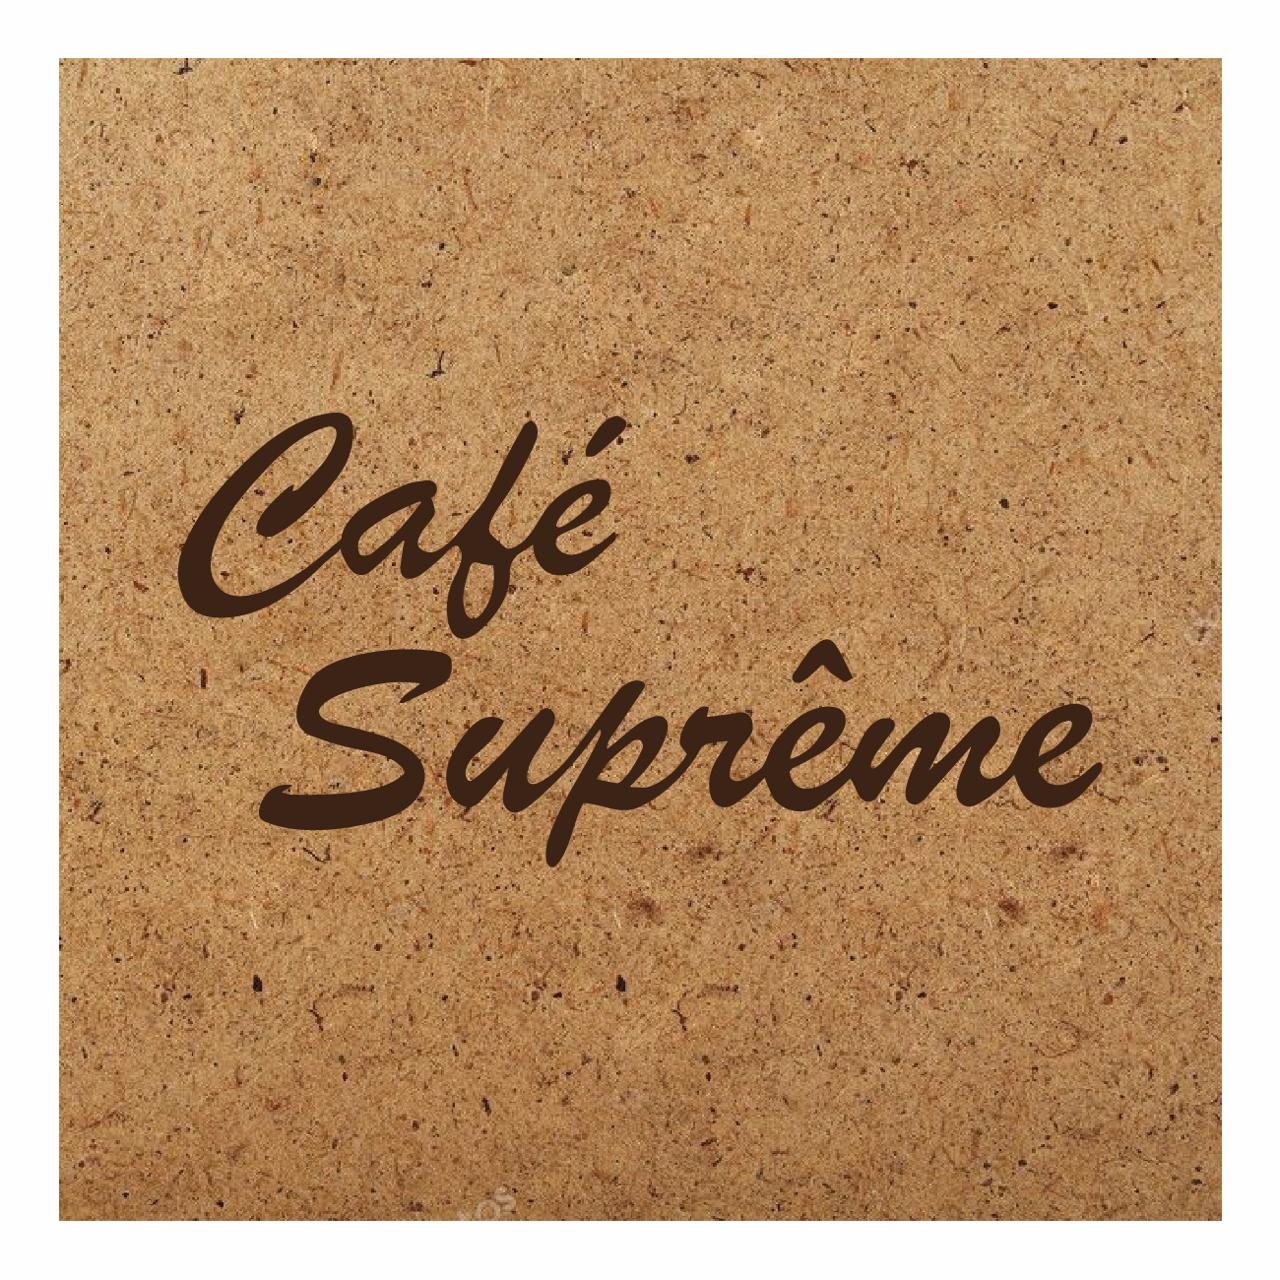 Cafe Supreme